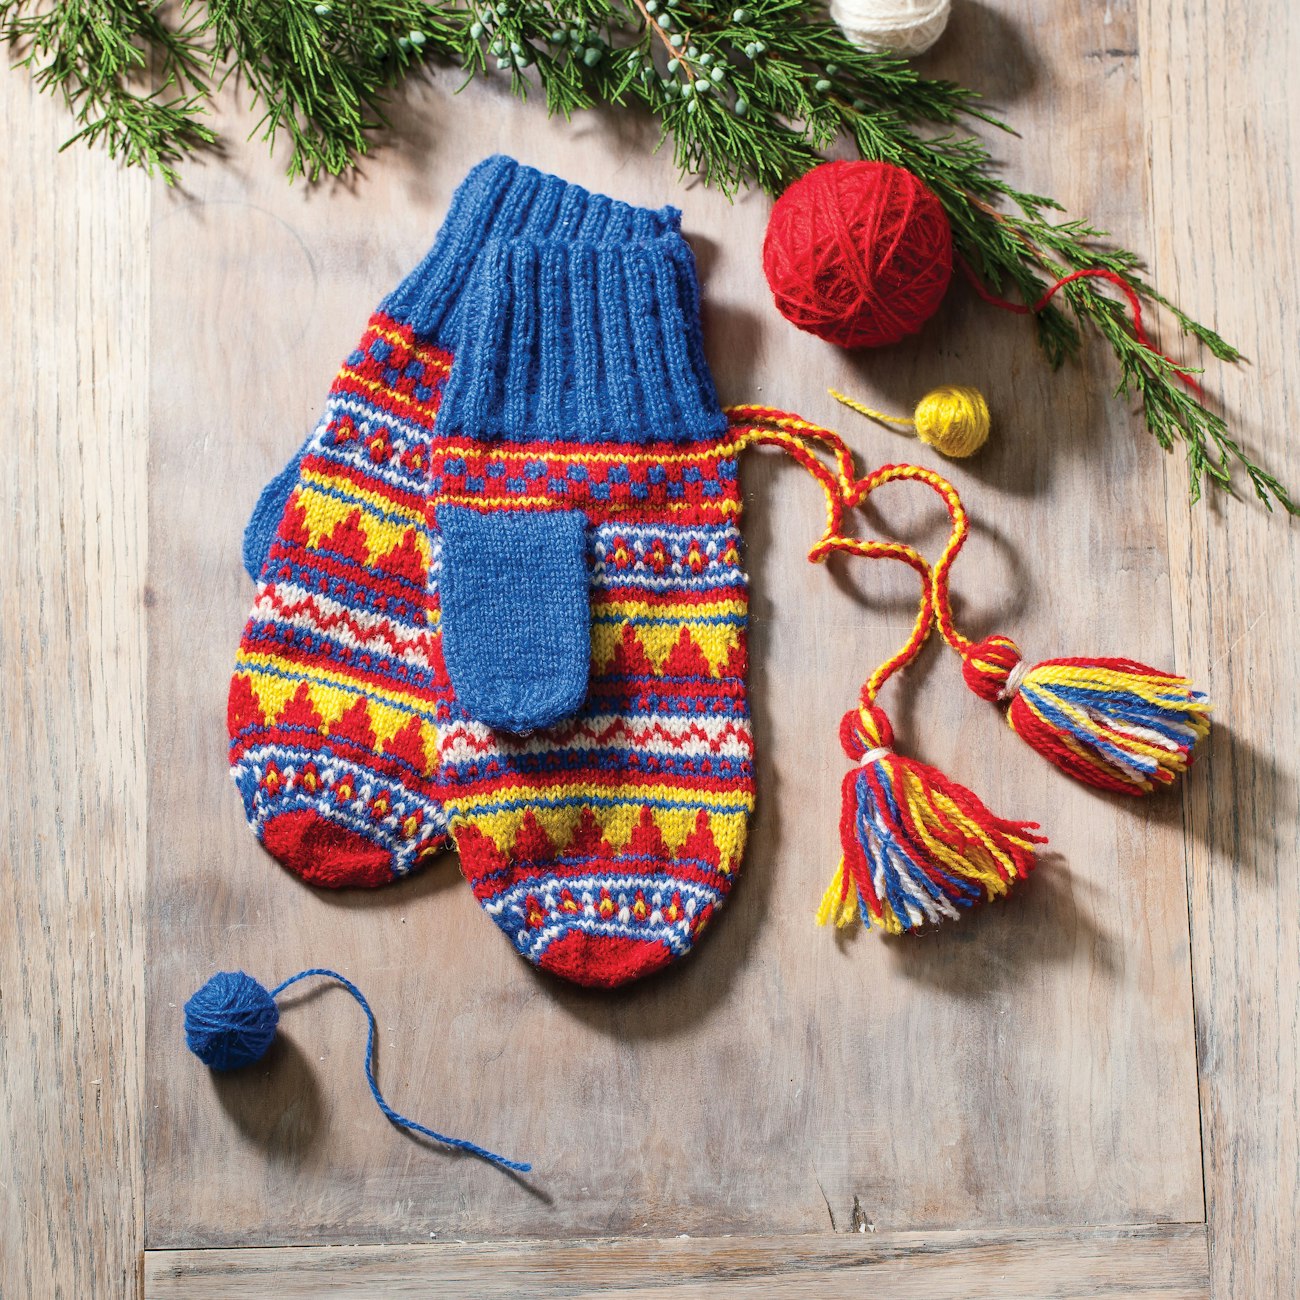 Karesuando Mittens to Knit was originally published in PieceWork, November-December 2015. Photo by Joe Coca